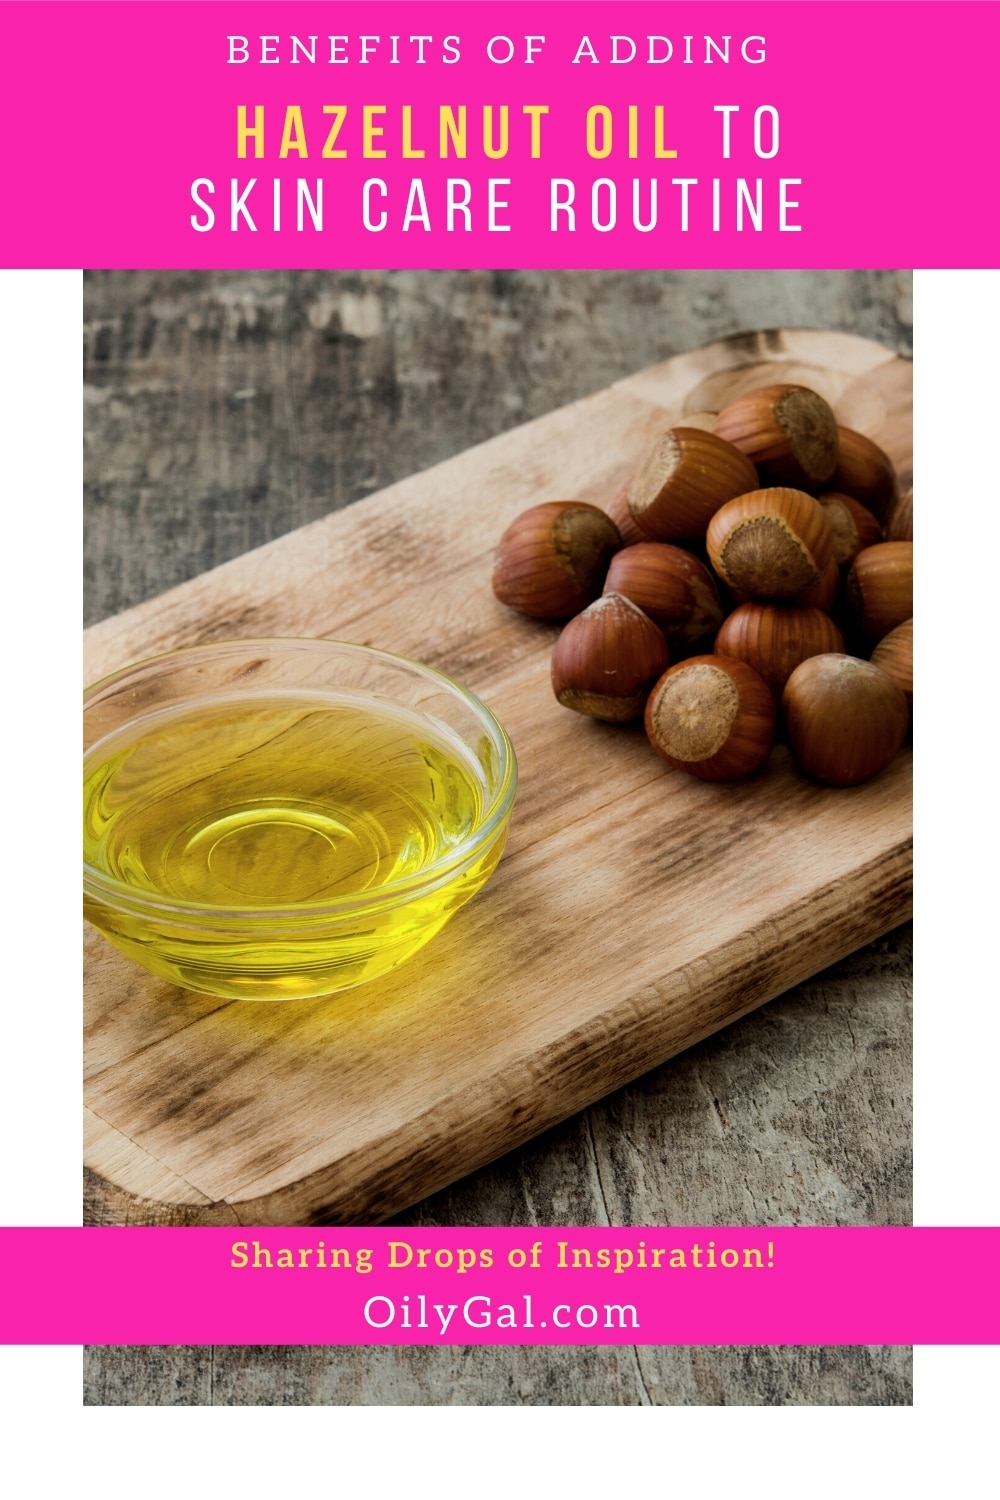 Hazelnut Oil for Skin Care Routine